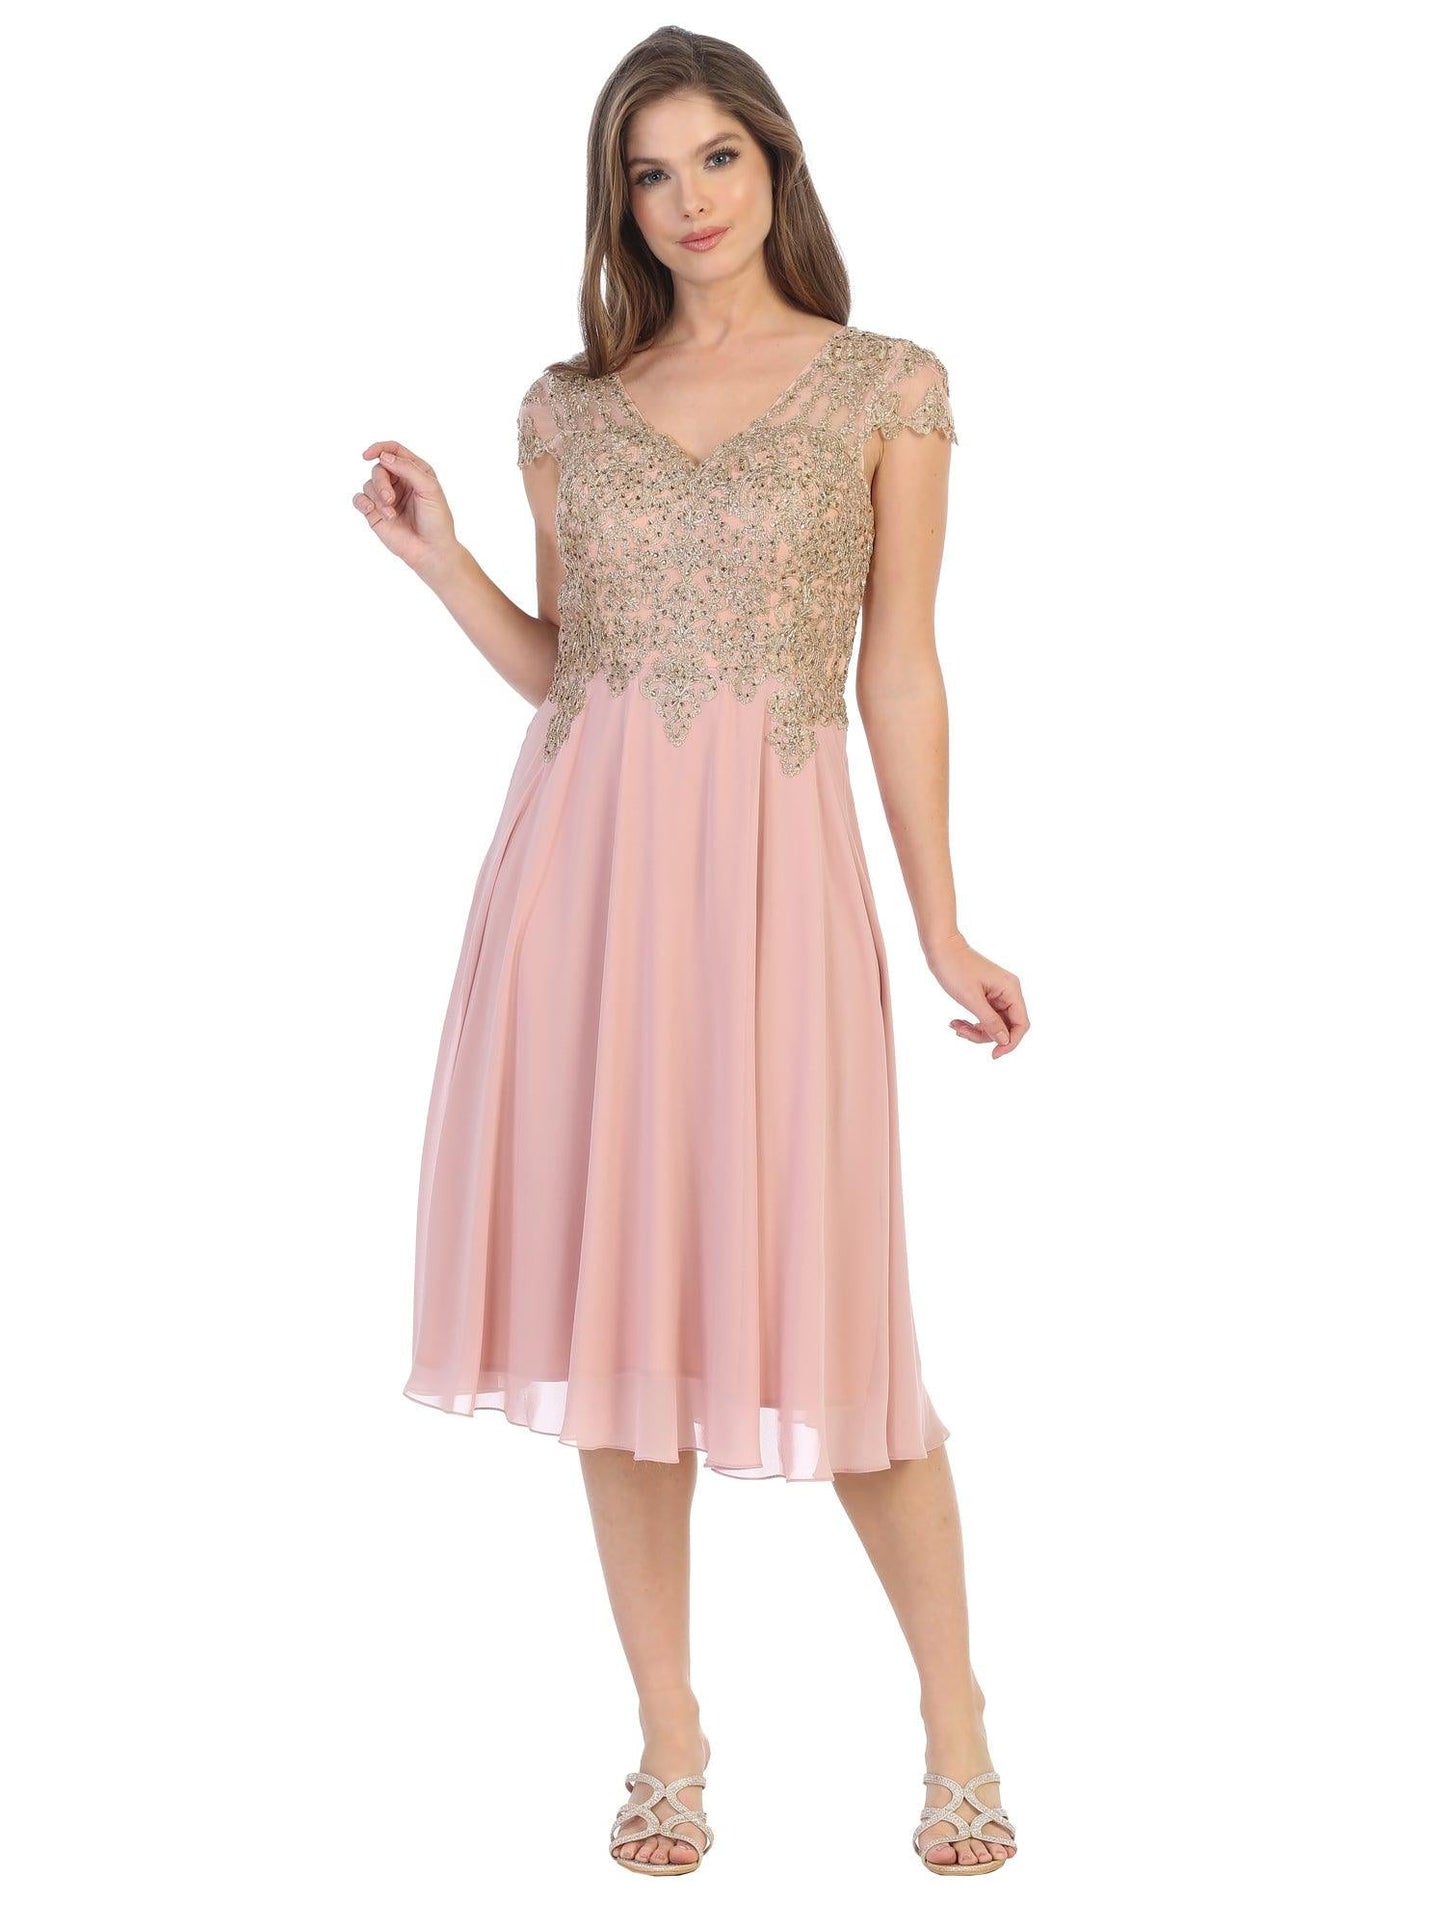 Short Dress Modest Formal Cap Sleeve - The Dress Outlet Eva Fashion